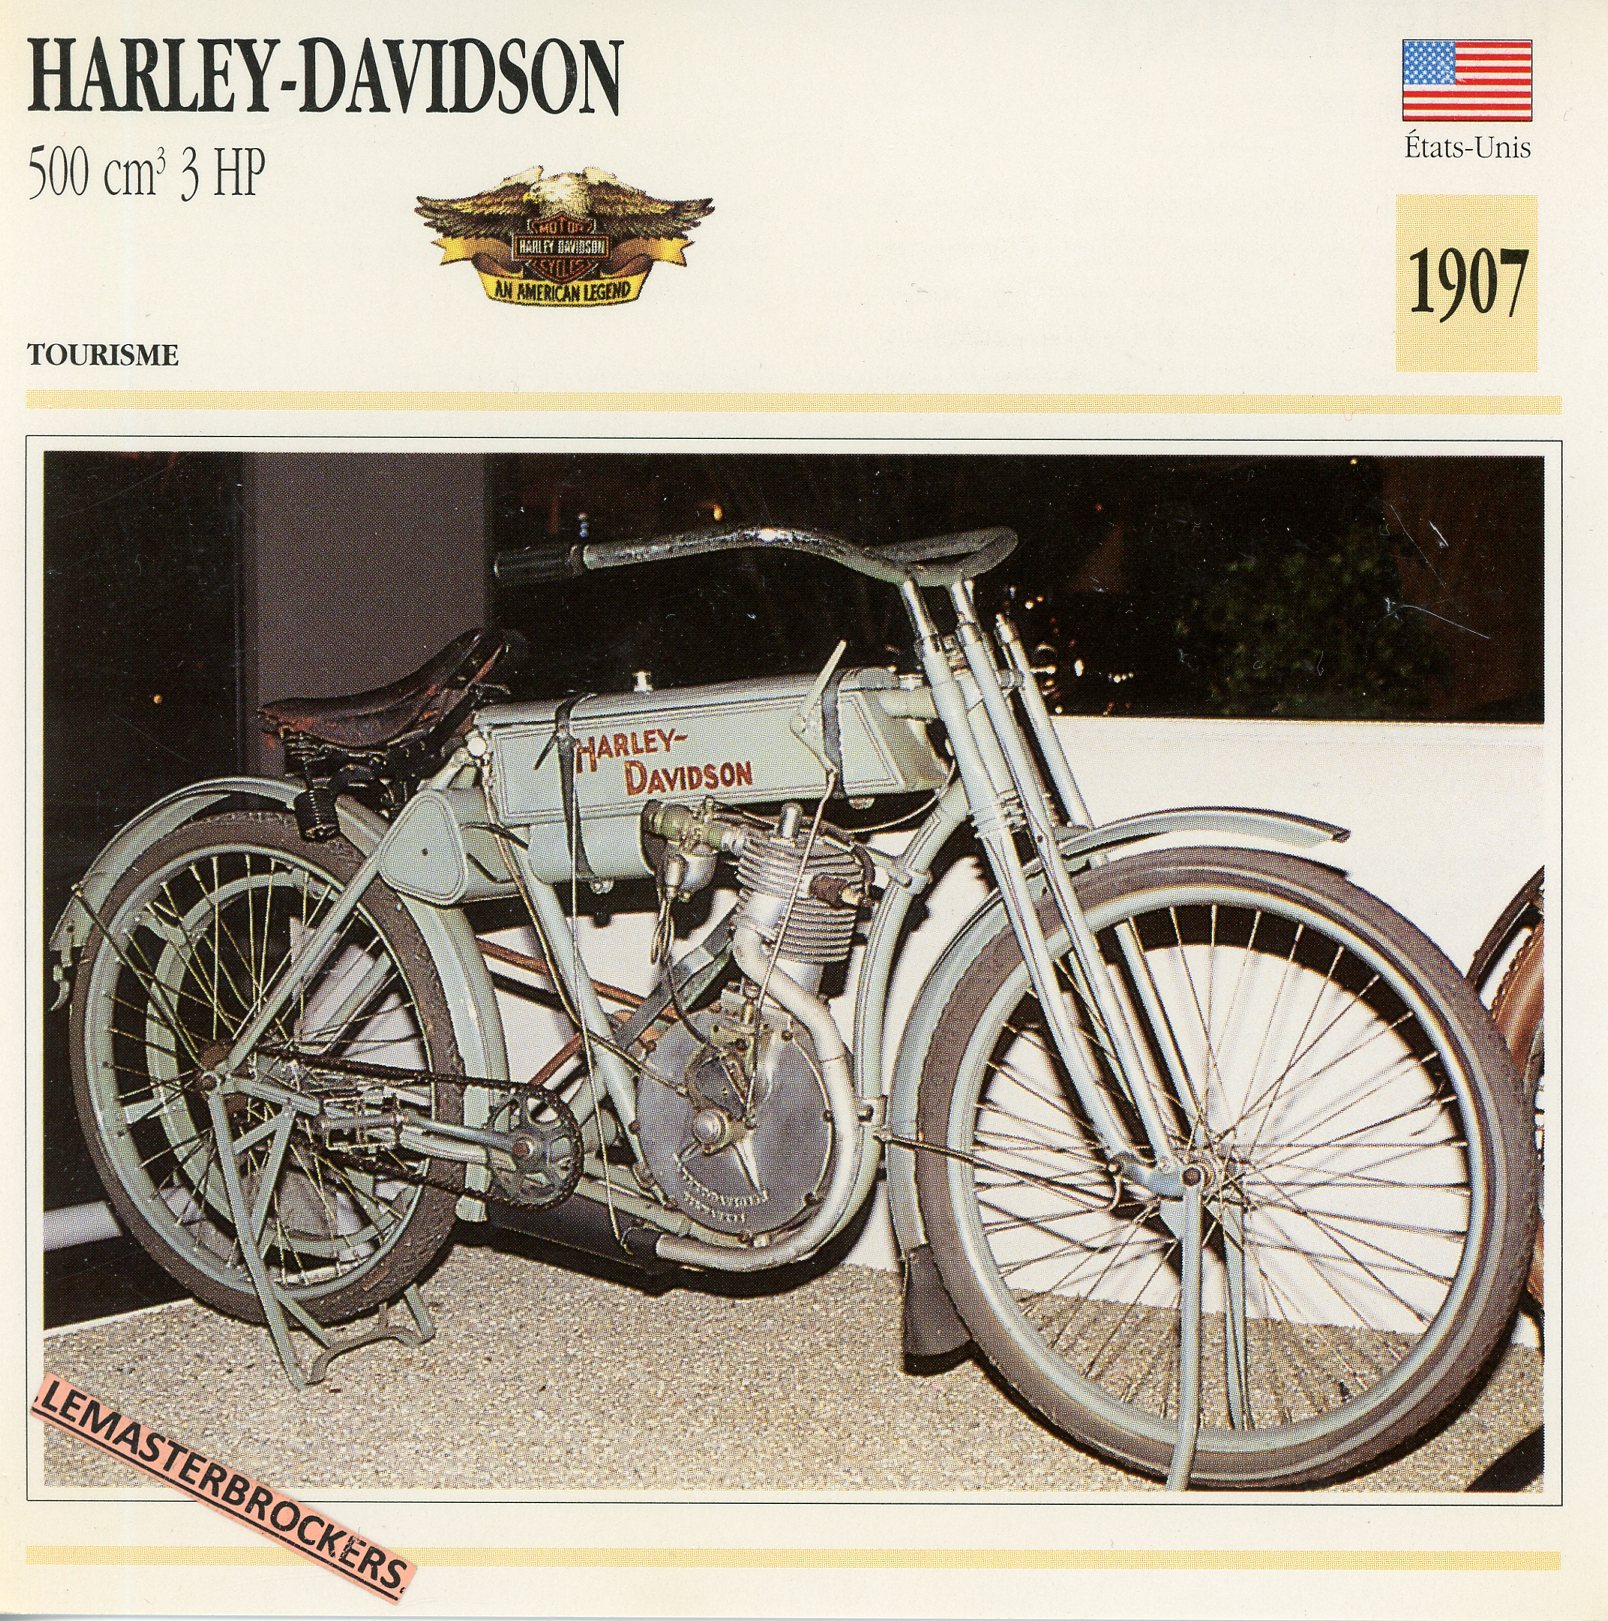 HARLEY-DAVIDSON-500HP-1907-LEMASTERBROCKERS-FICHE-MOTO-ATLAS-COLLECTION-CARD